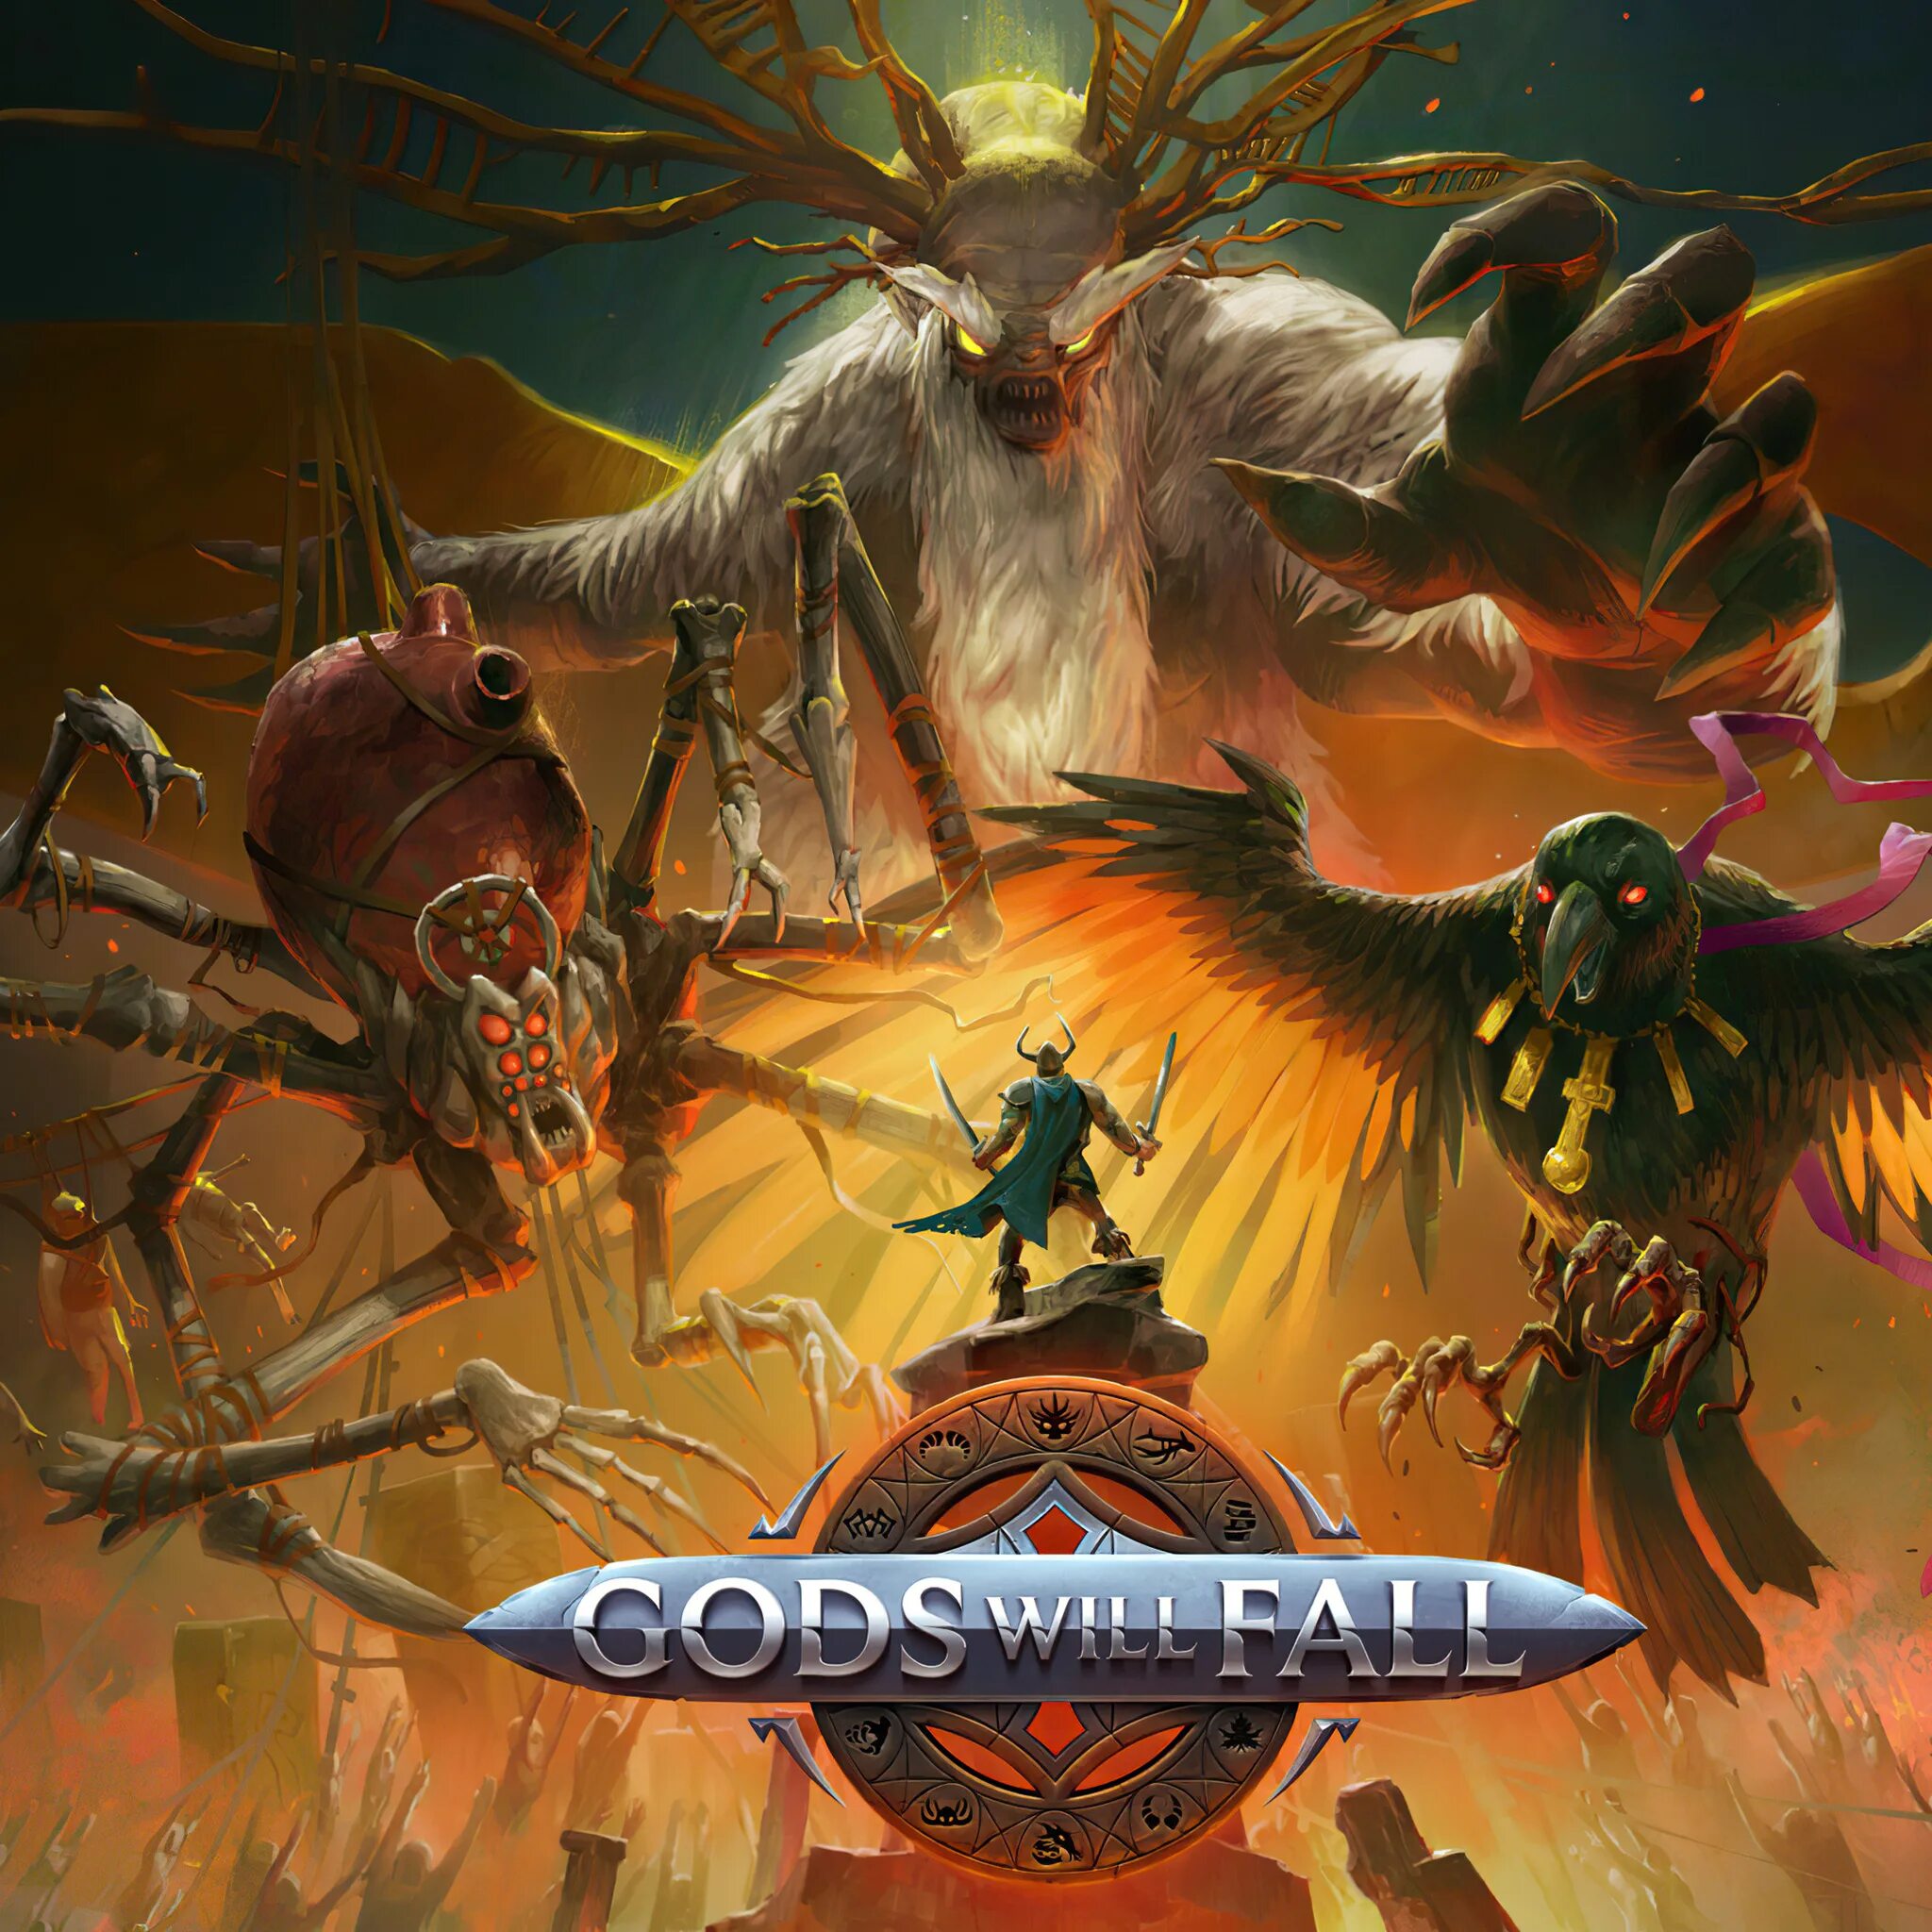 He will fall. Gods will Fall: Valiant Edition. Gods will Fall игра. Gods will Fall обложка. Gods will Fall Xbox.